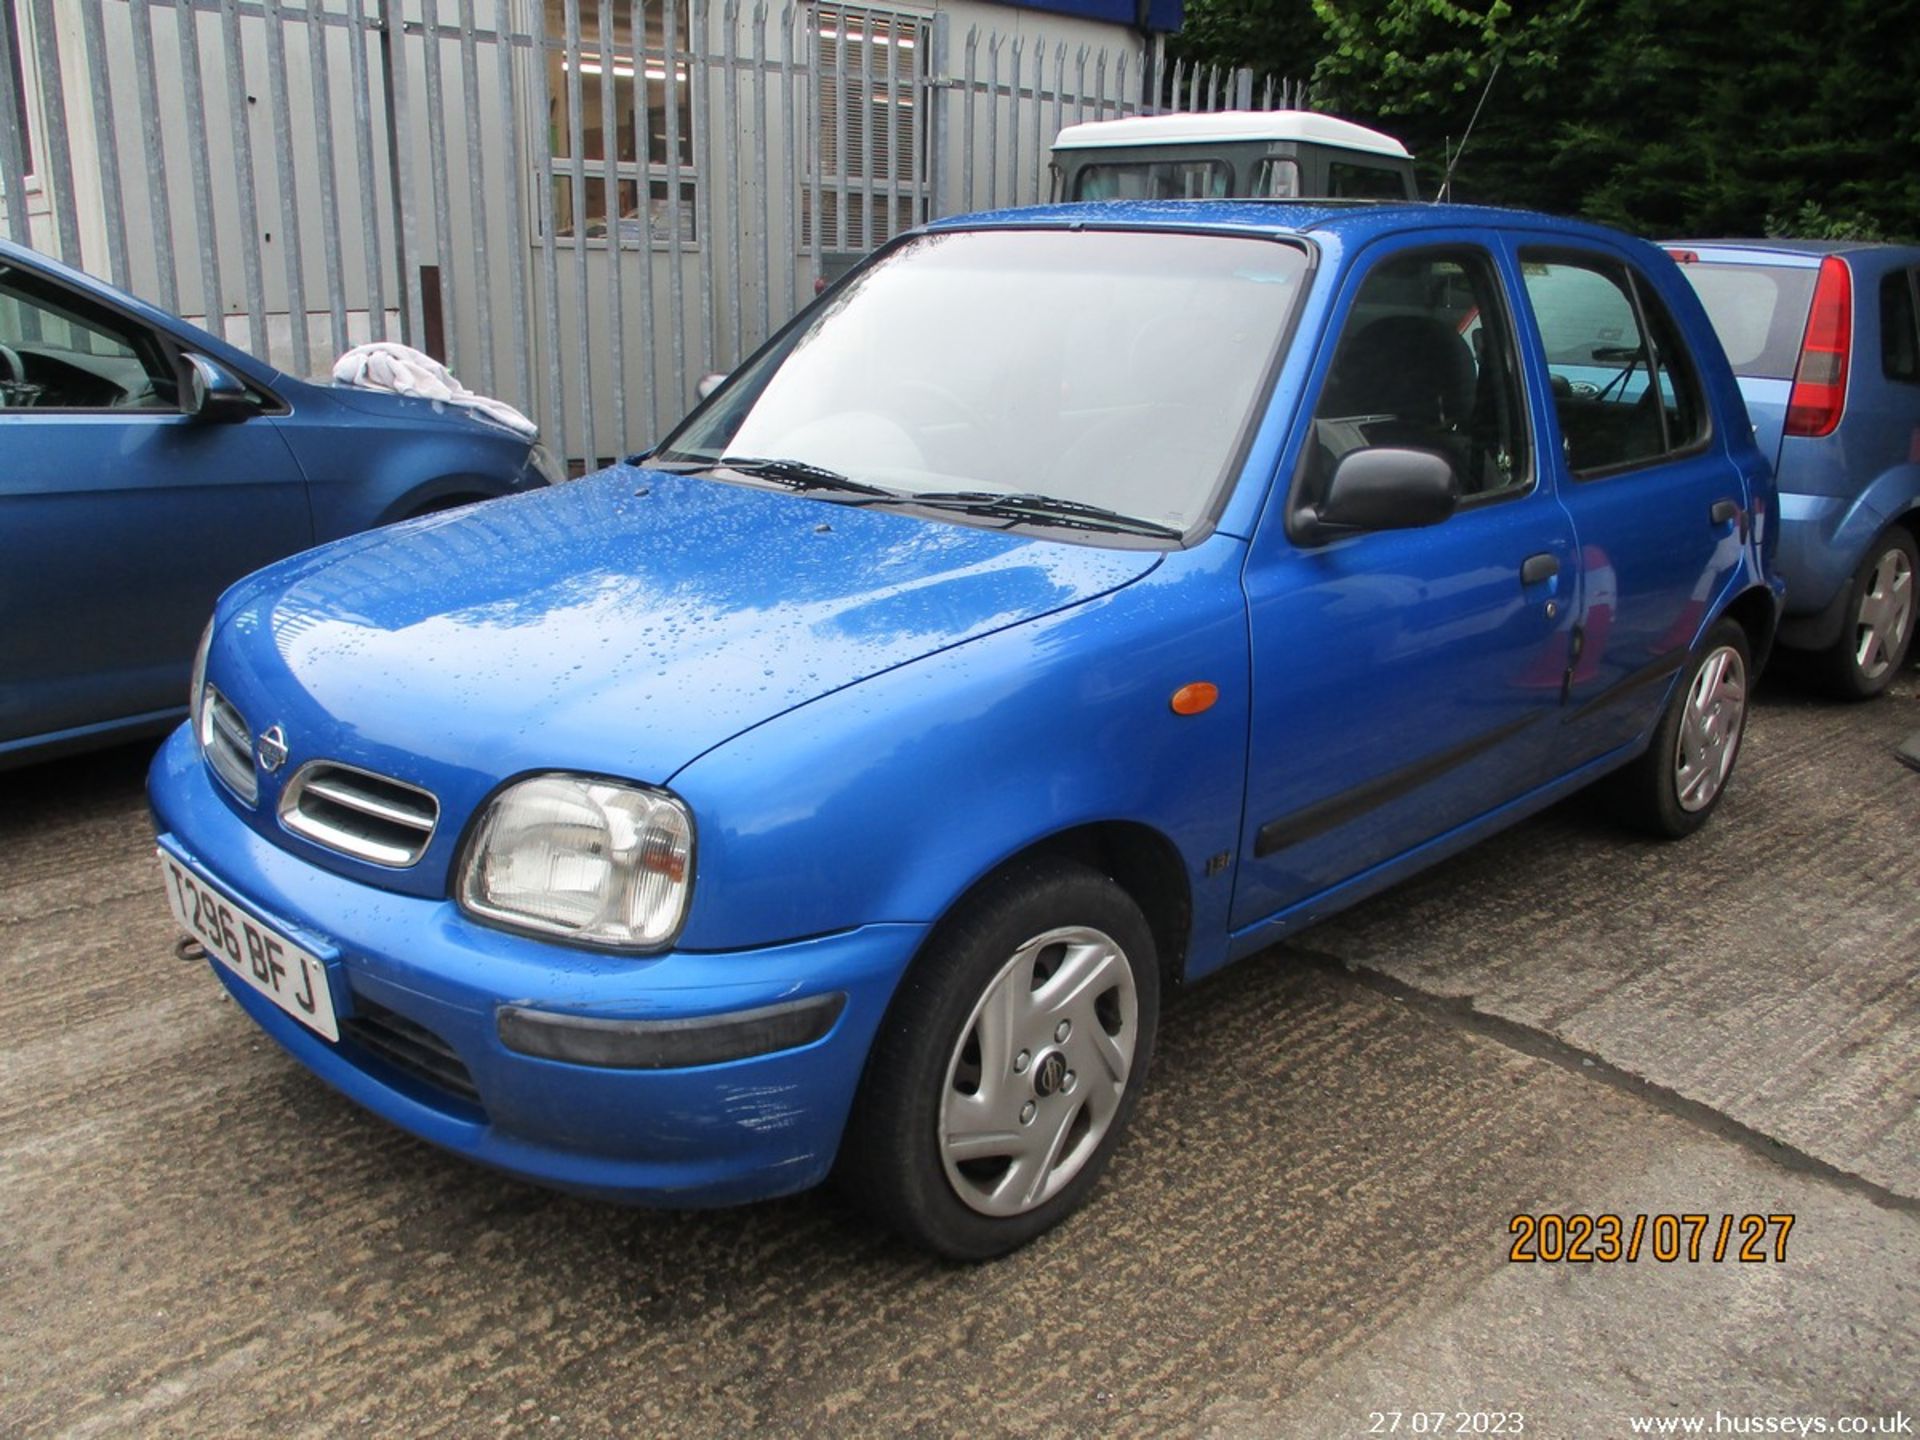 1999 NISSAN MICRA GX AUTO - 1275cc 5dr Hatchback (Blue) - Image 41 of 47